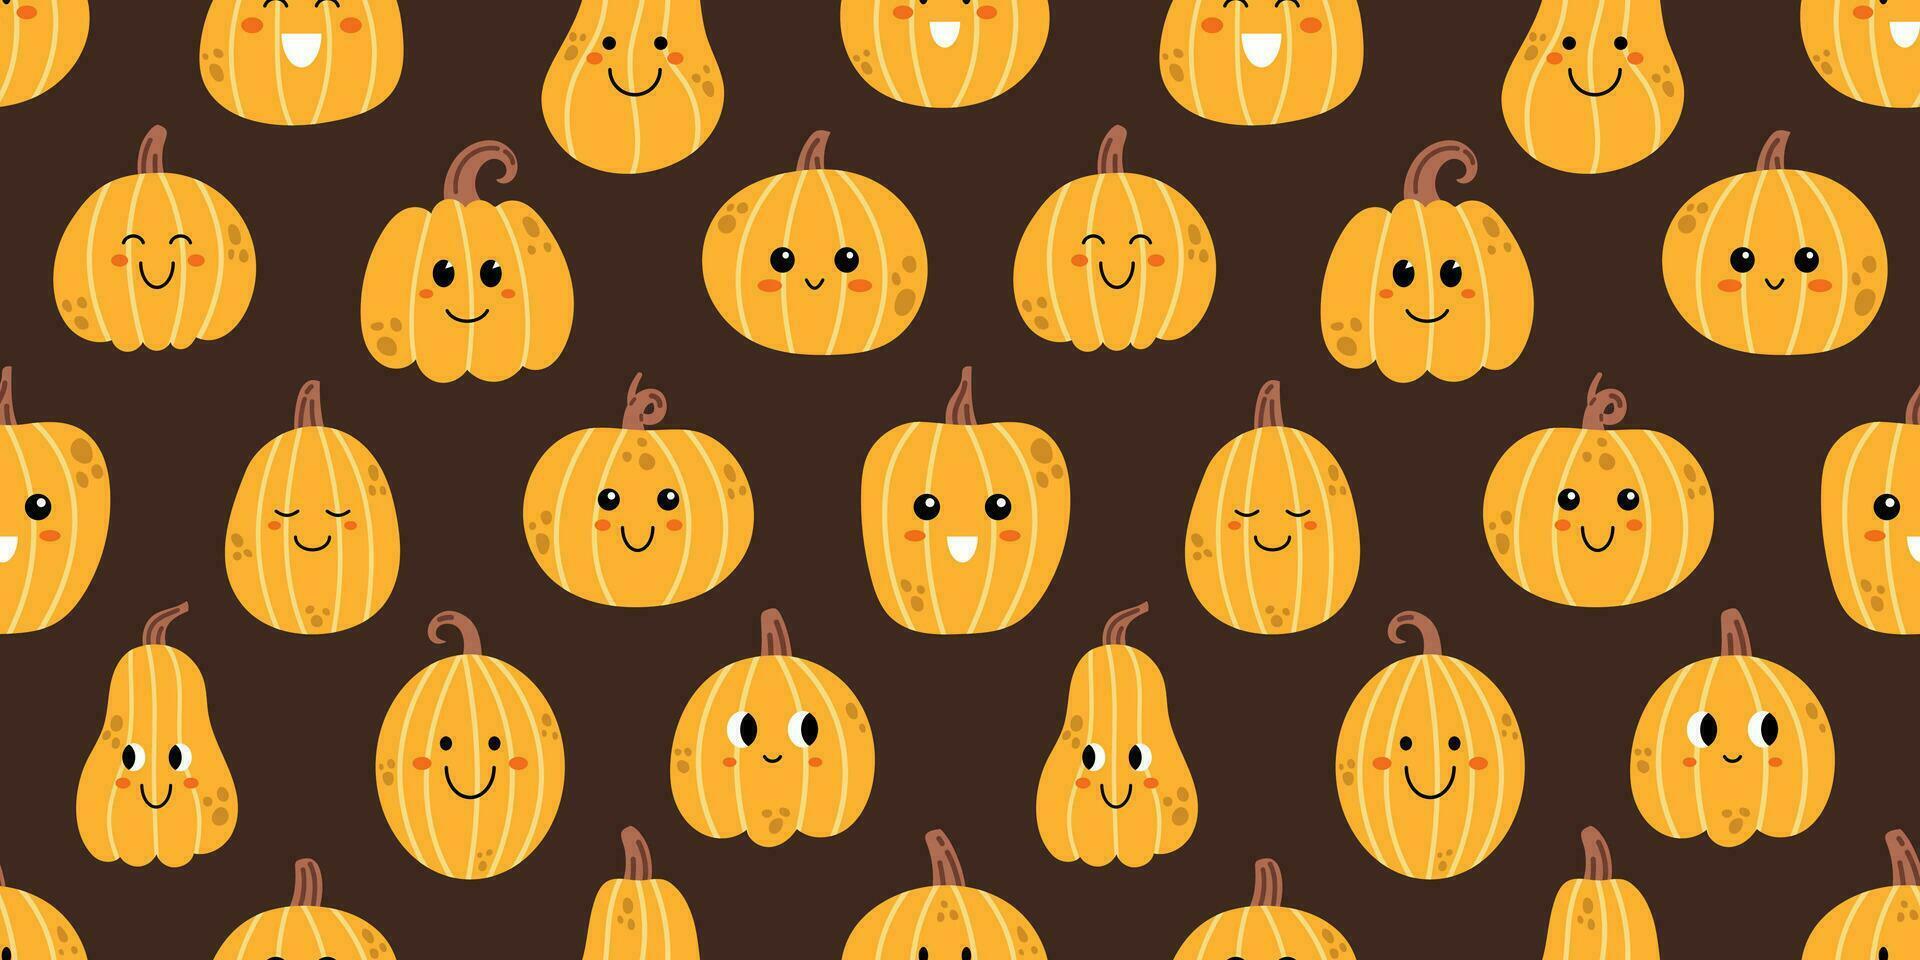 Vector autumn seamless pattern with cute pumpkins. Yellow smiling pumpkins on dark brown background. Thanksgiving or Halloween seamless pattern with cute pumpkins. Fall print in flat design